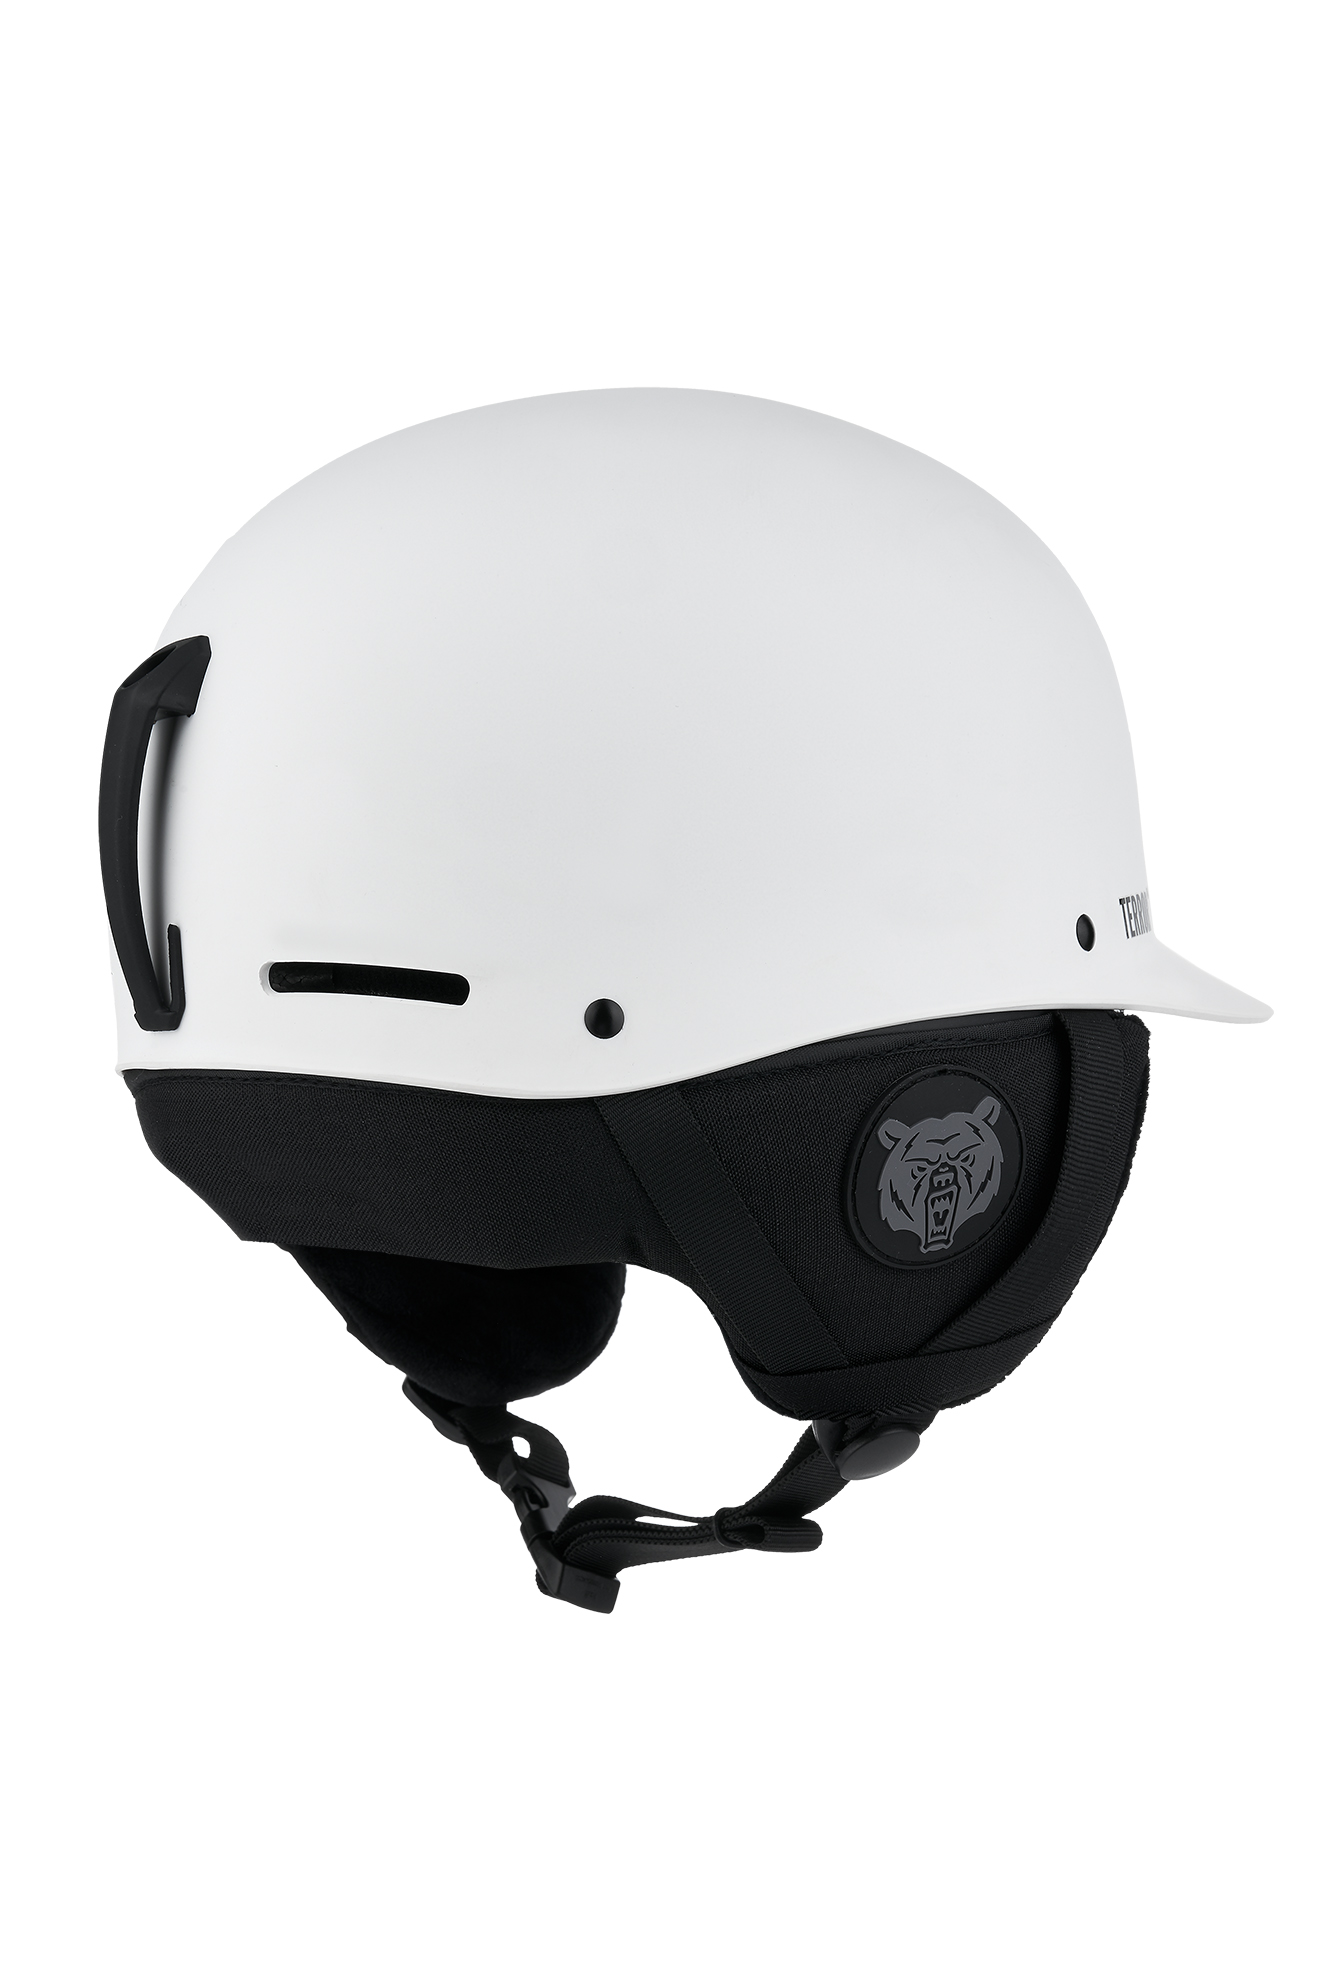 Шлем зимний Terror 19-20 Crang White, цвет белый, размер L 0001998 - фото 5